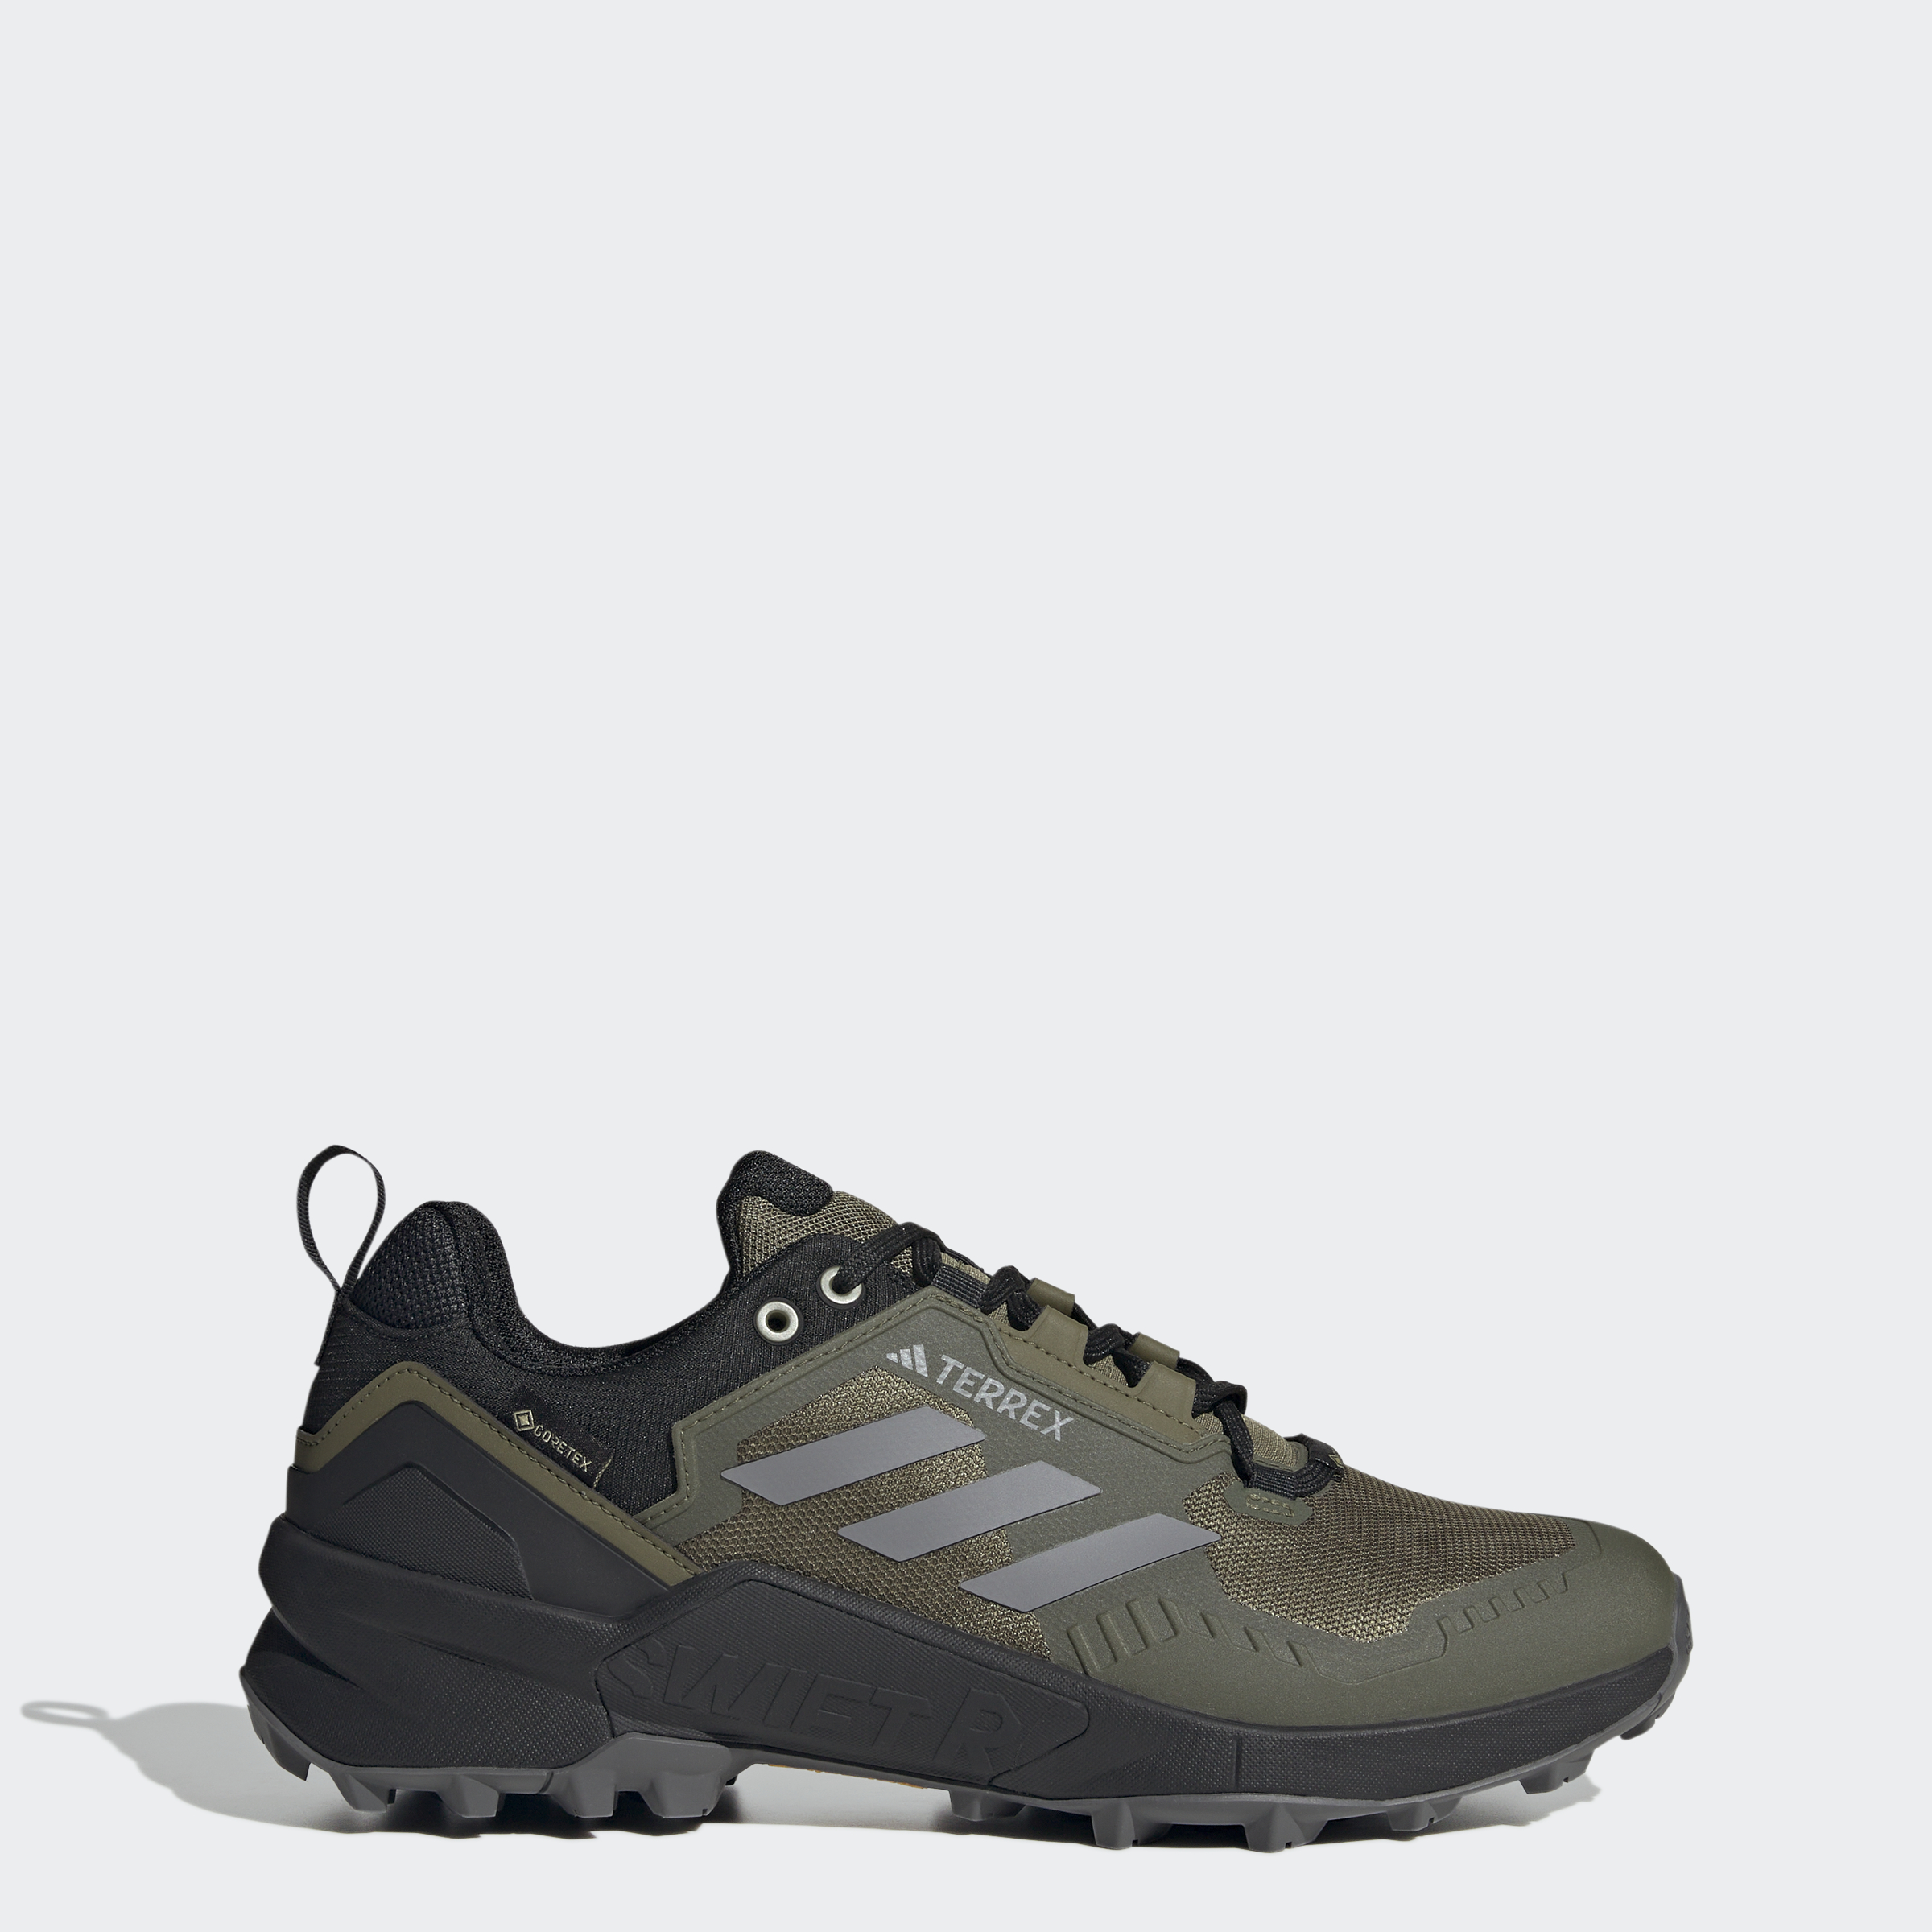 adidas TERREX Swift R3 GORE-TEX Hiking Shoes Men's | eBay